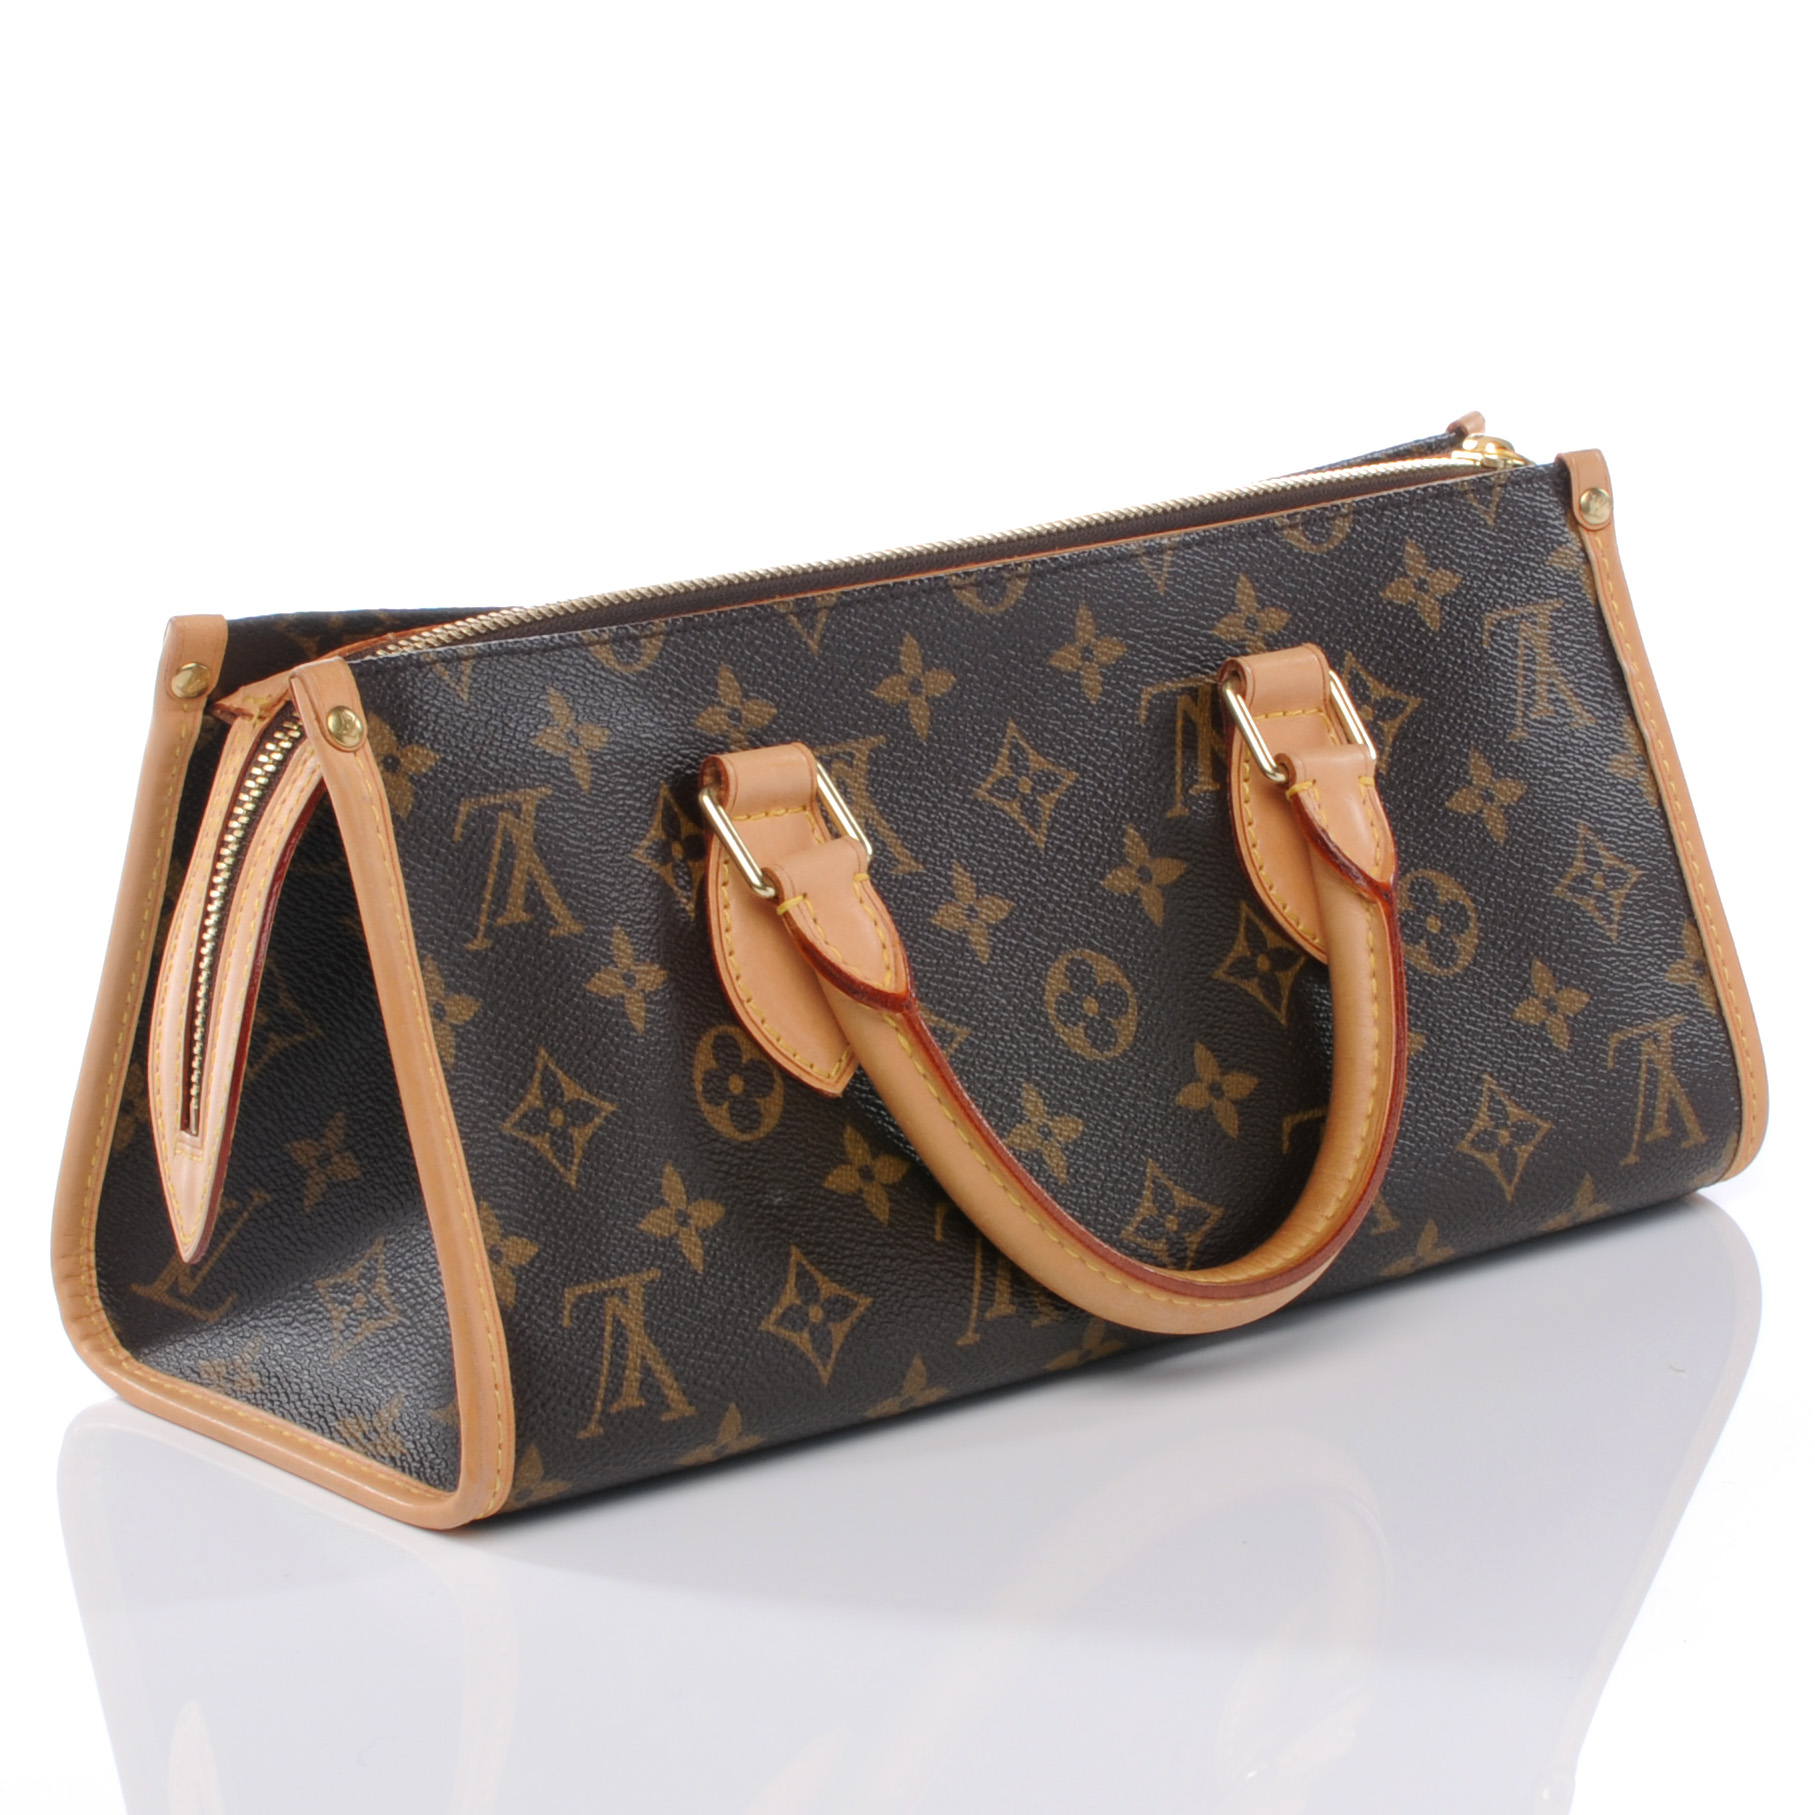 Louis Vuitton At Neiman Marcus Handbags | IQS Executive